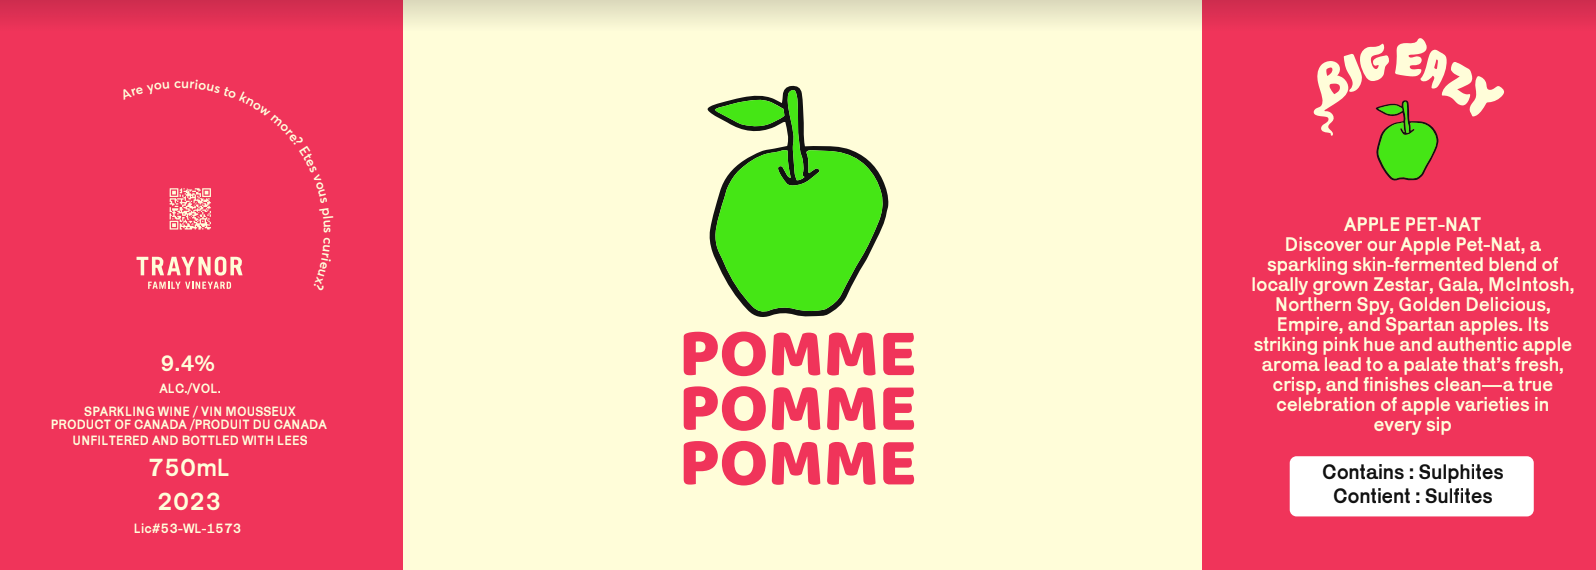 Pomme Pomme Pomme label - Big Eazy Wines